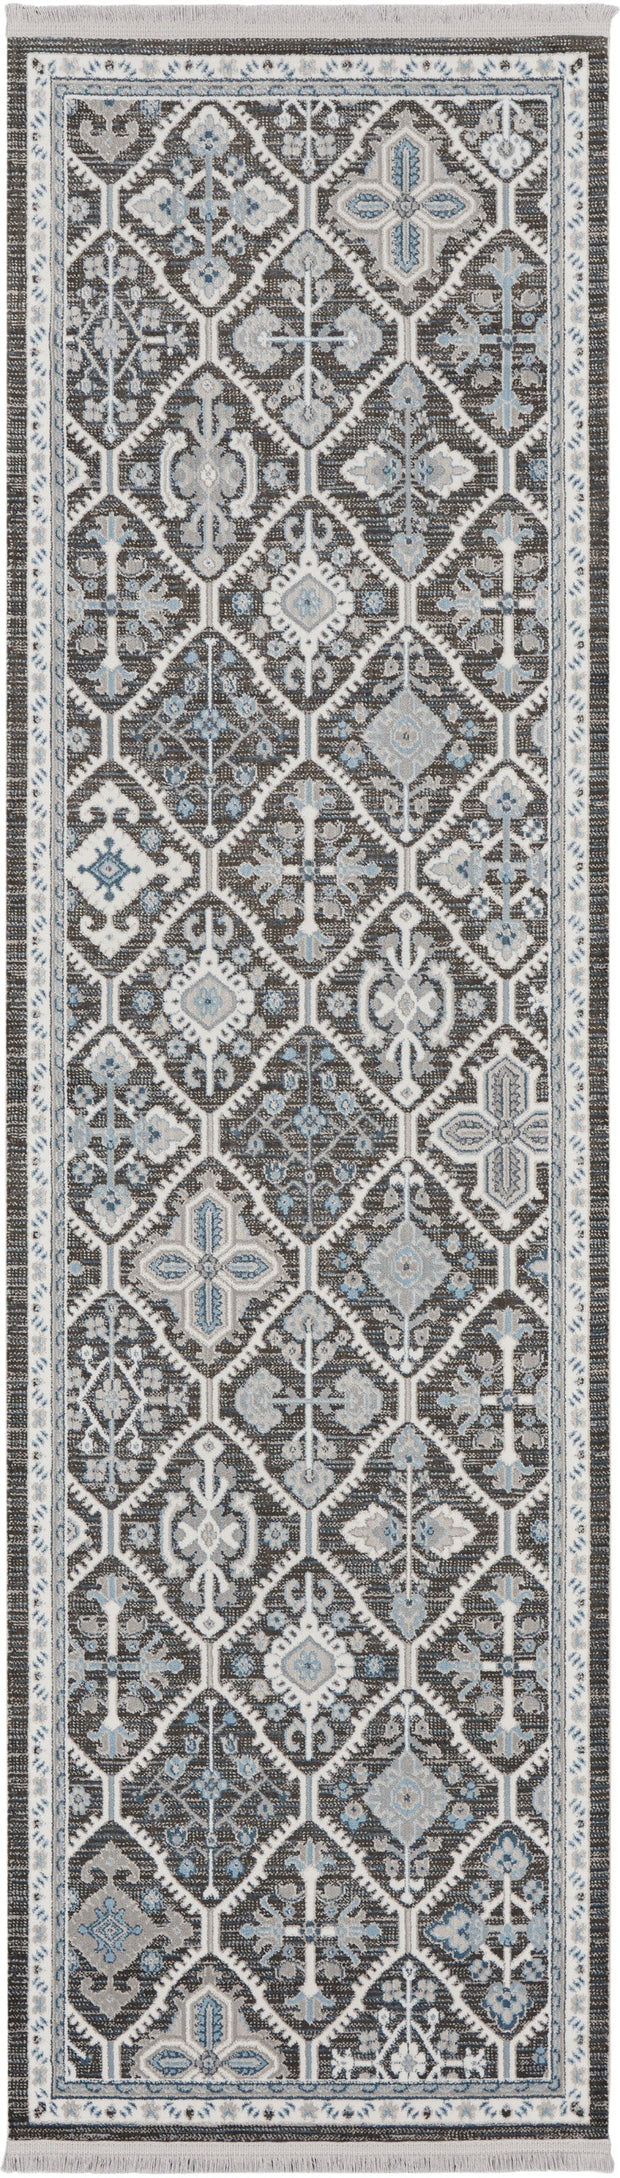 lennox charcoal ivory blue rug by nourison 99446888075 redo 2